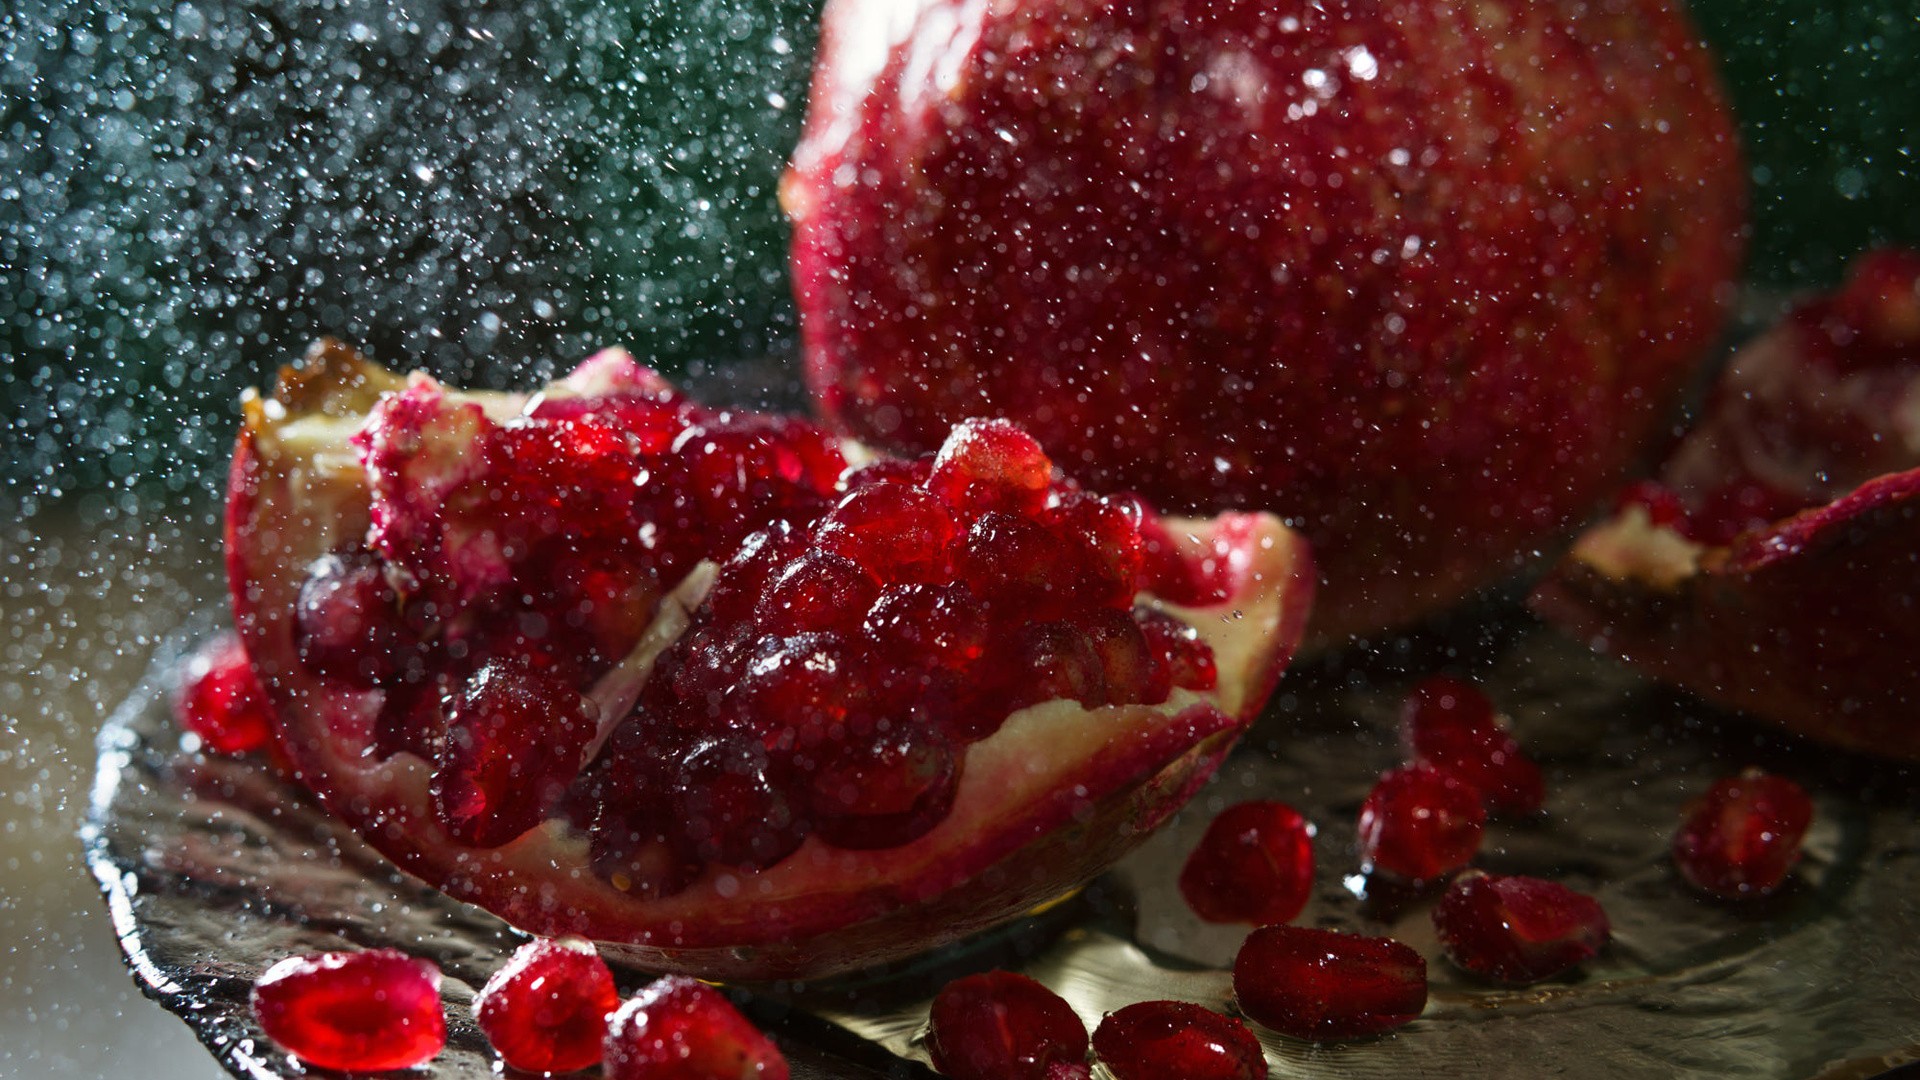 Pomegranate wallpaper photo hd